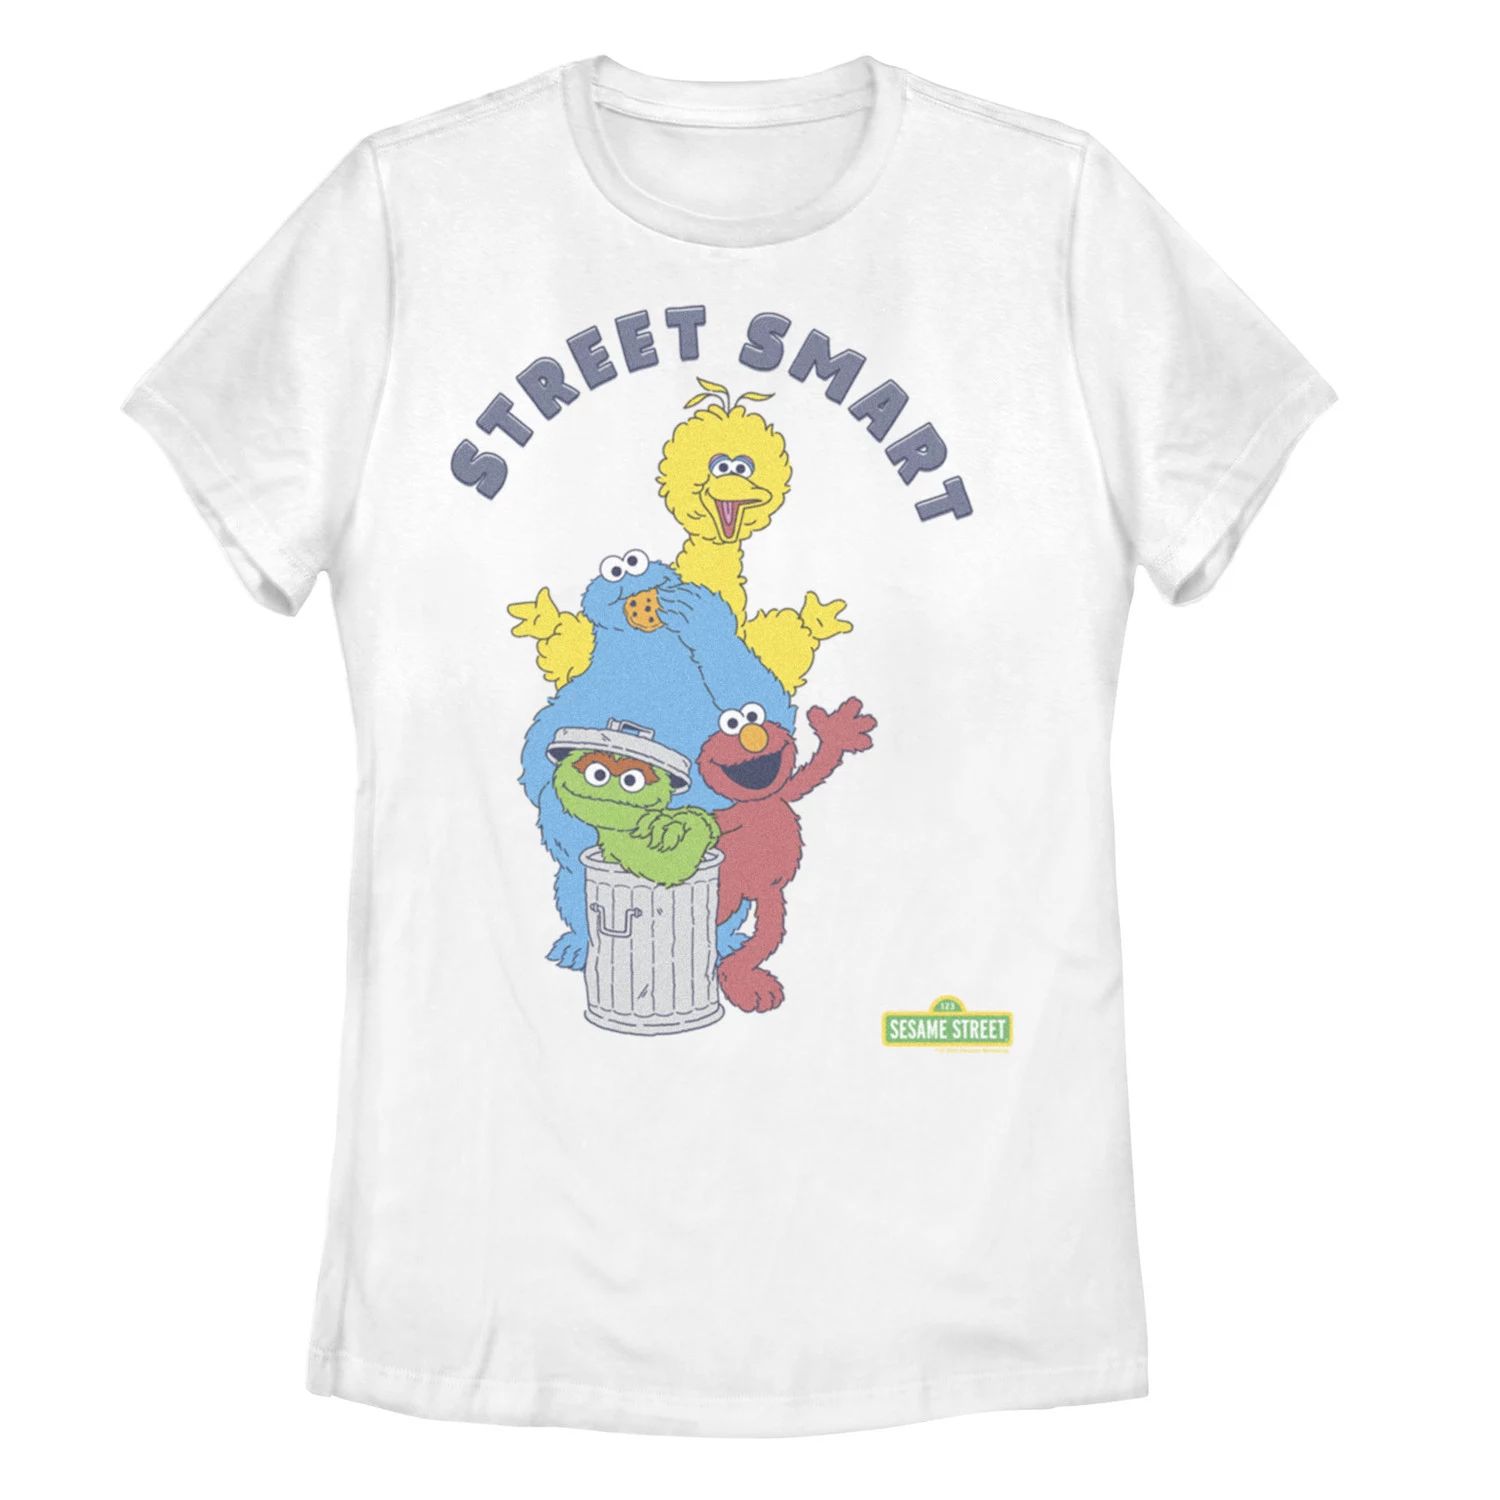 Детская футболка с графическим рисунком «Улица Сезам Улица Улица Сезам» Licensed Character конструктор улица сезам